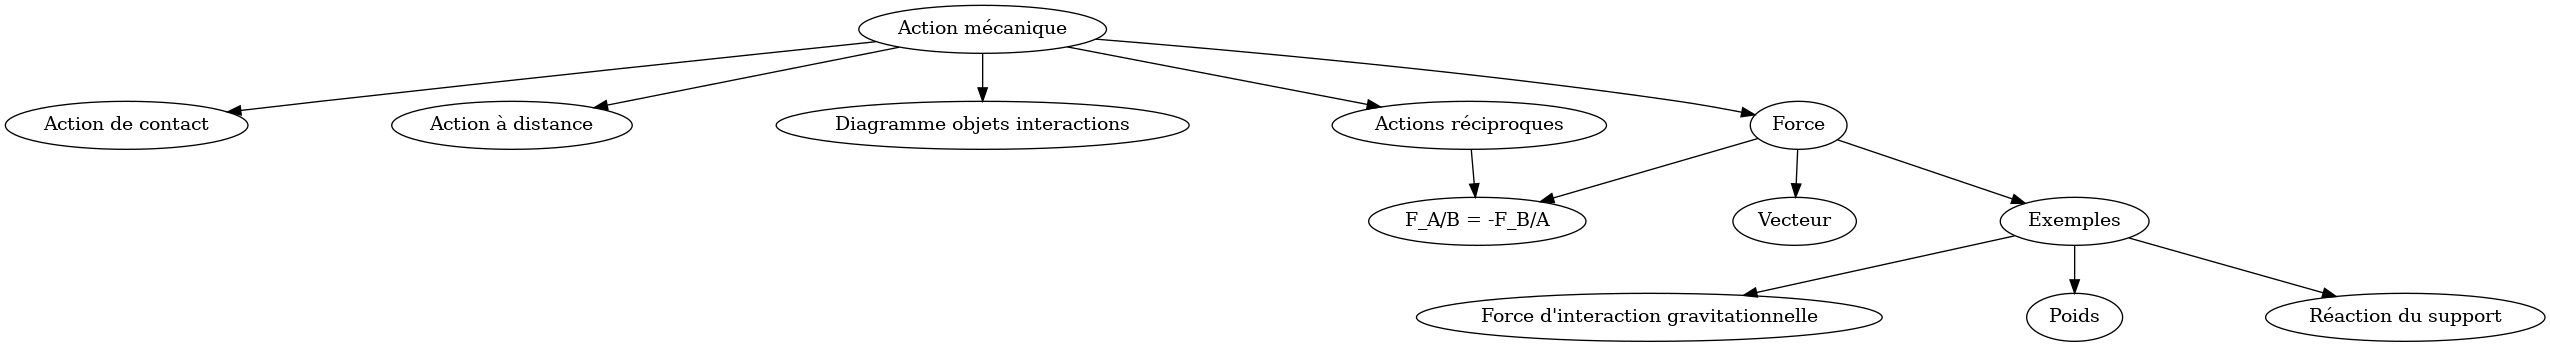 T2C02-bilan_actions_mecaniques.png